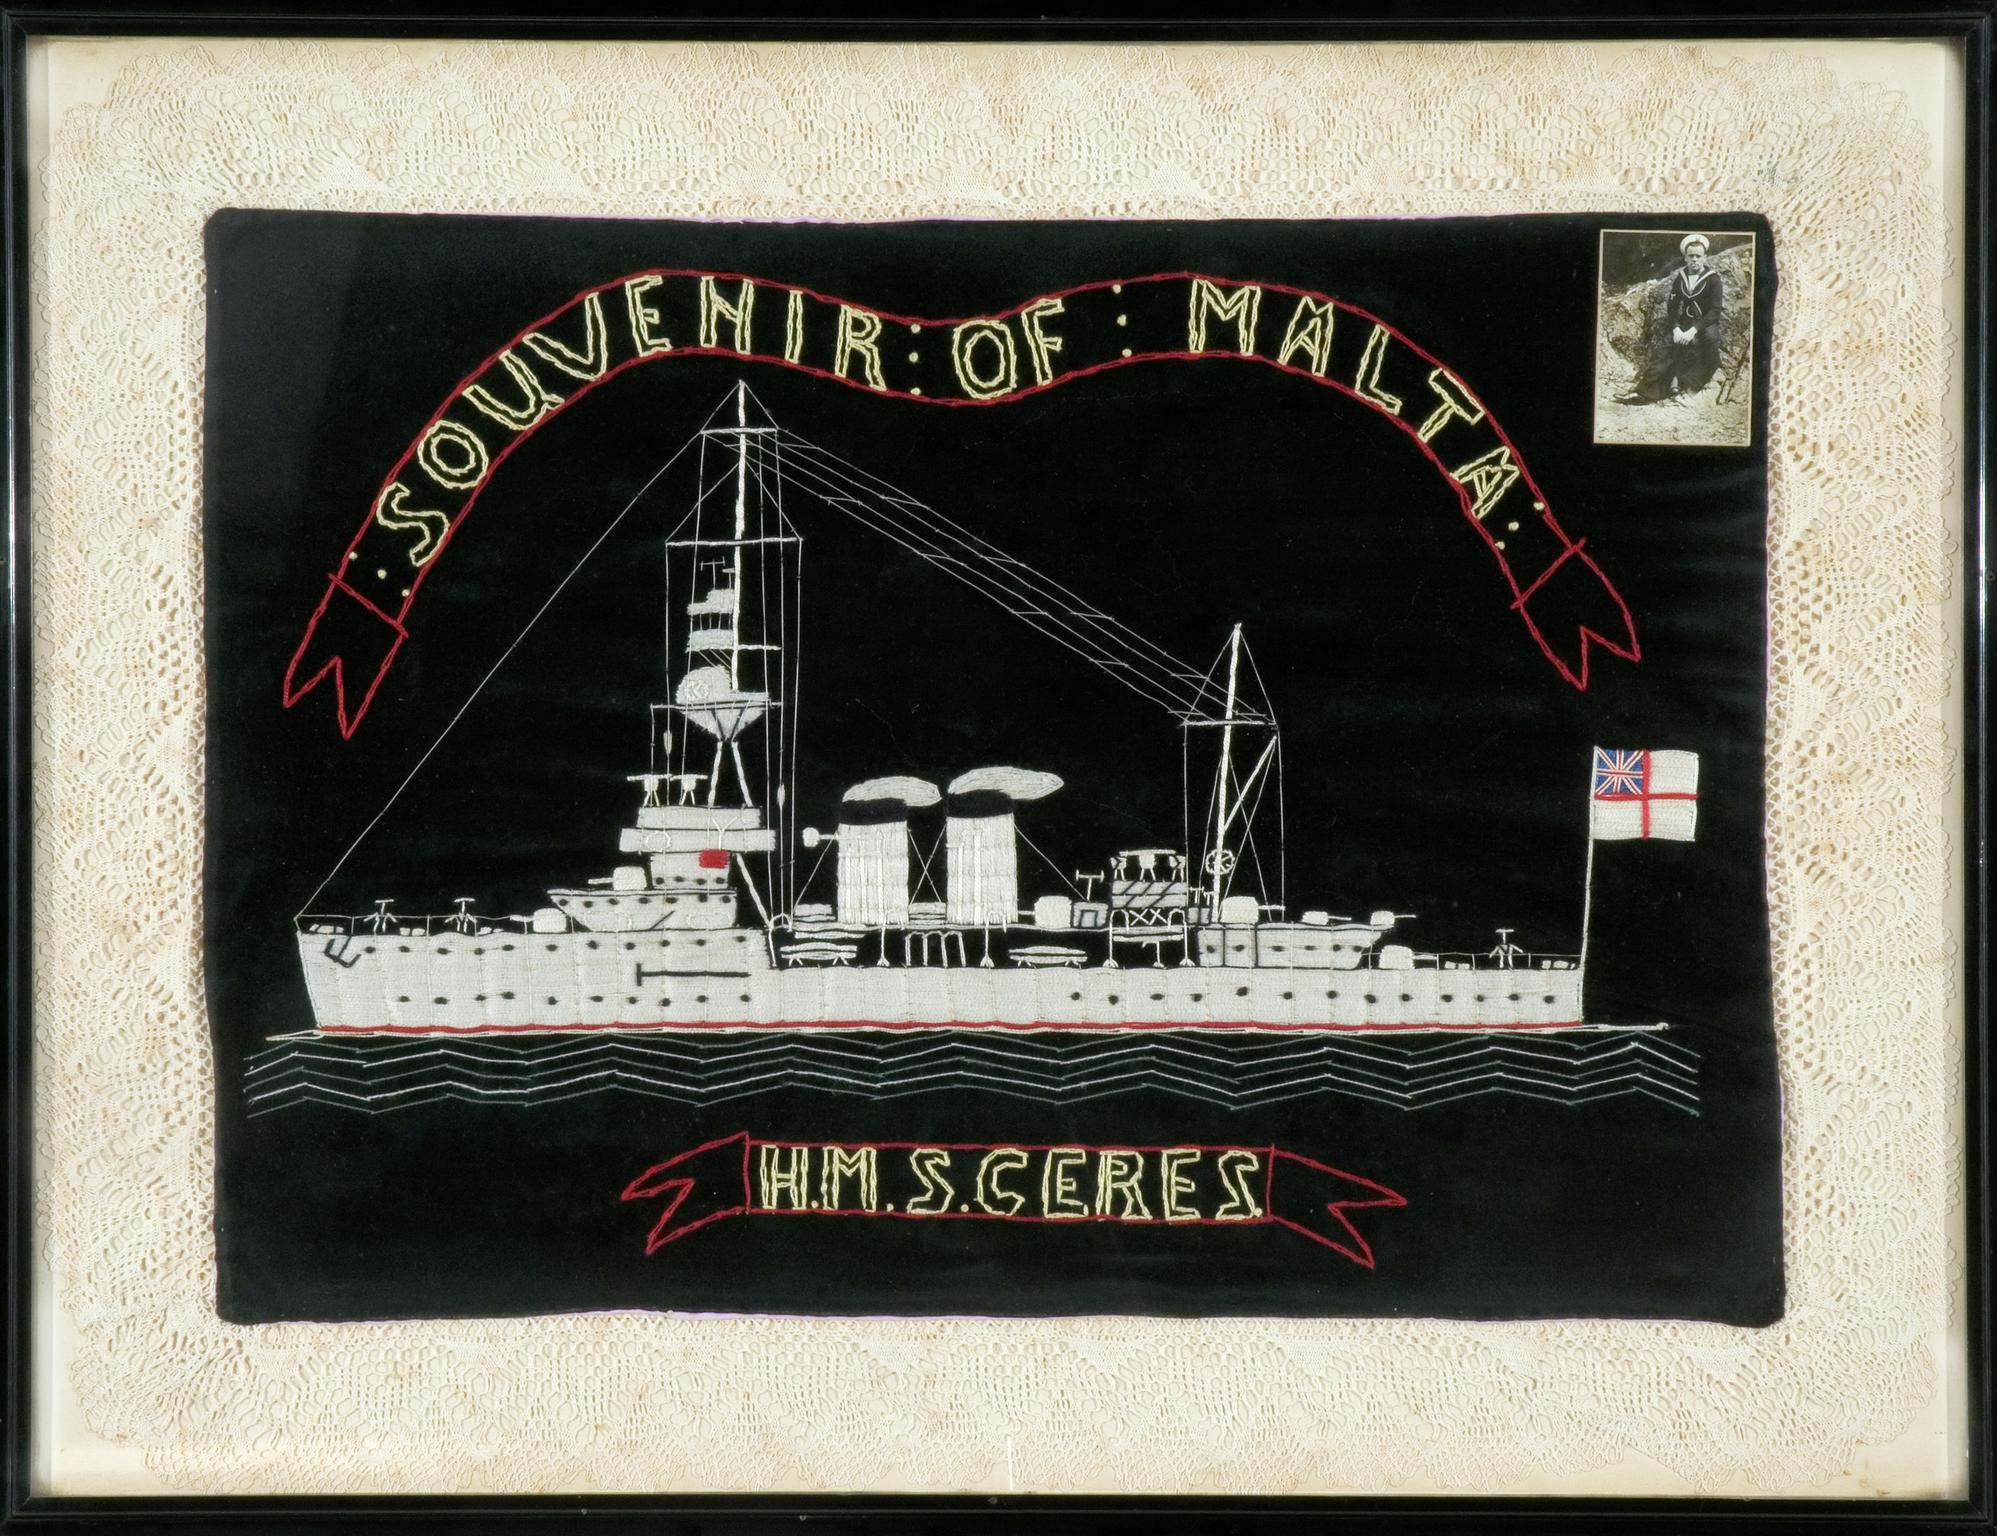 H.M.S. CERES - Souvenir of Malta (applique)